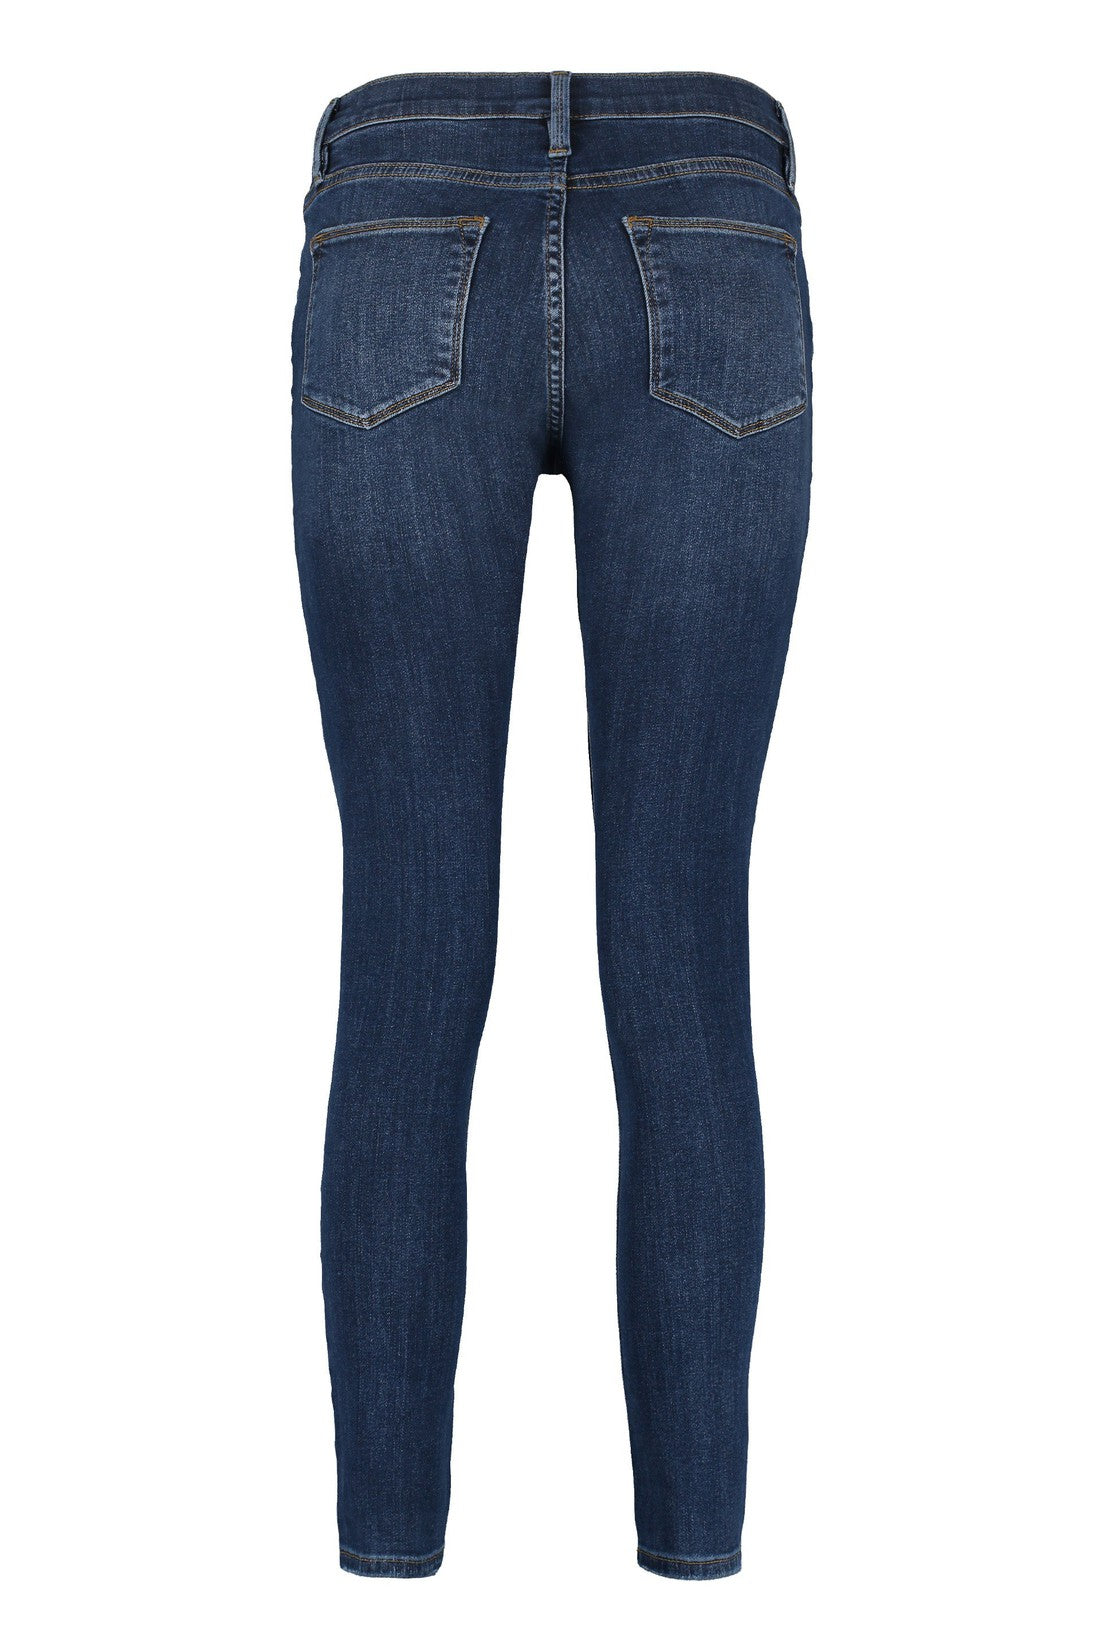 Frame-OUTLET-SALE-High-rise skinny-fit jeans-ARCHIVIST